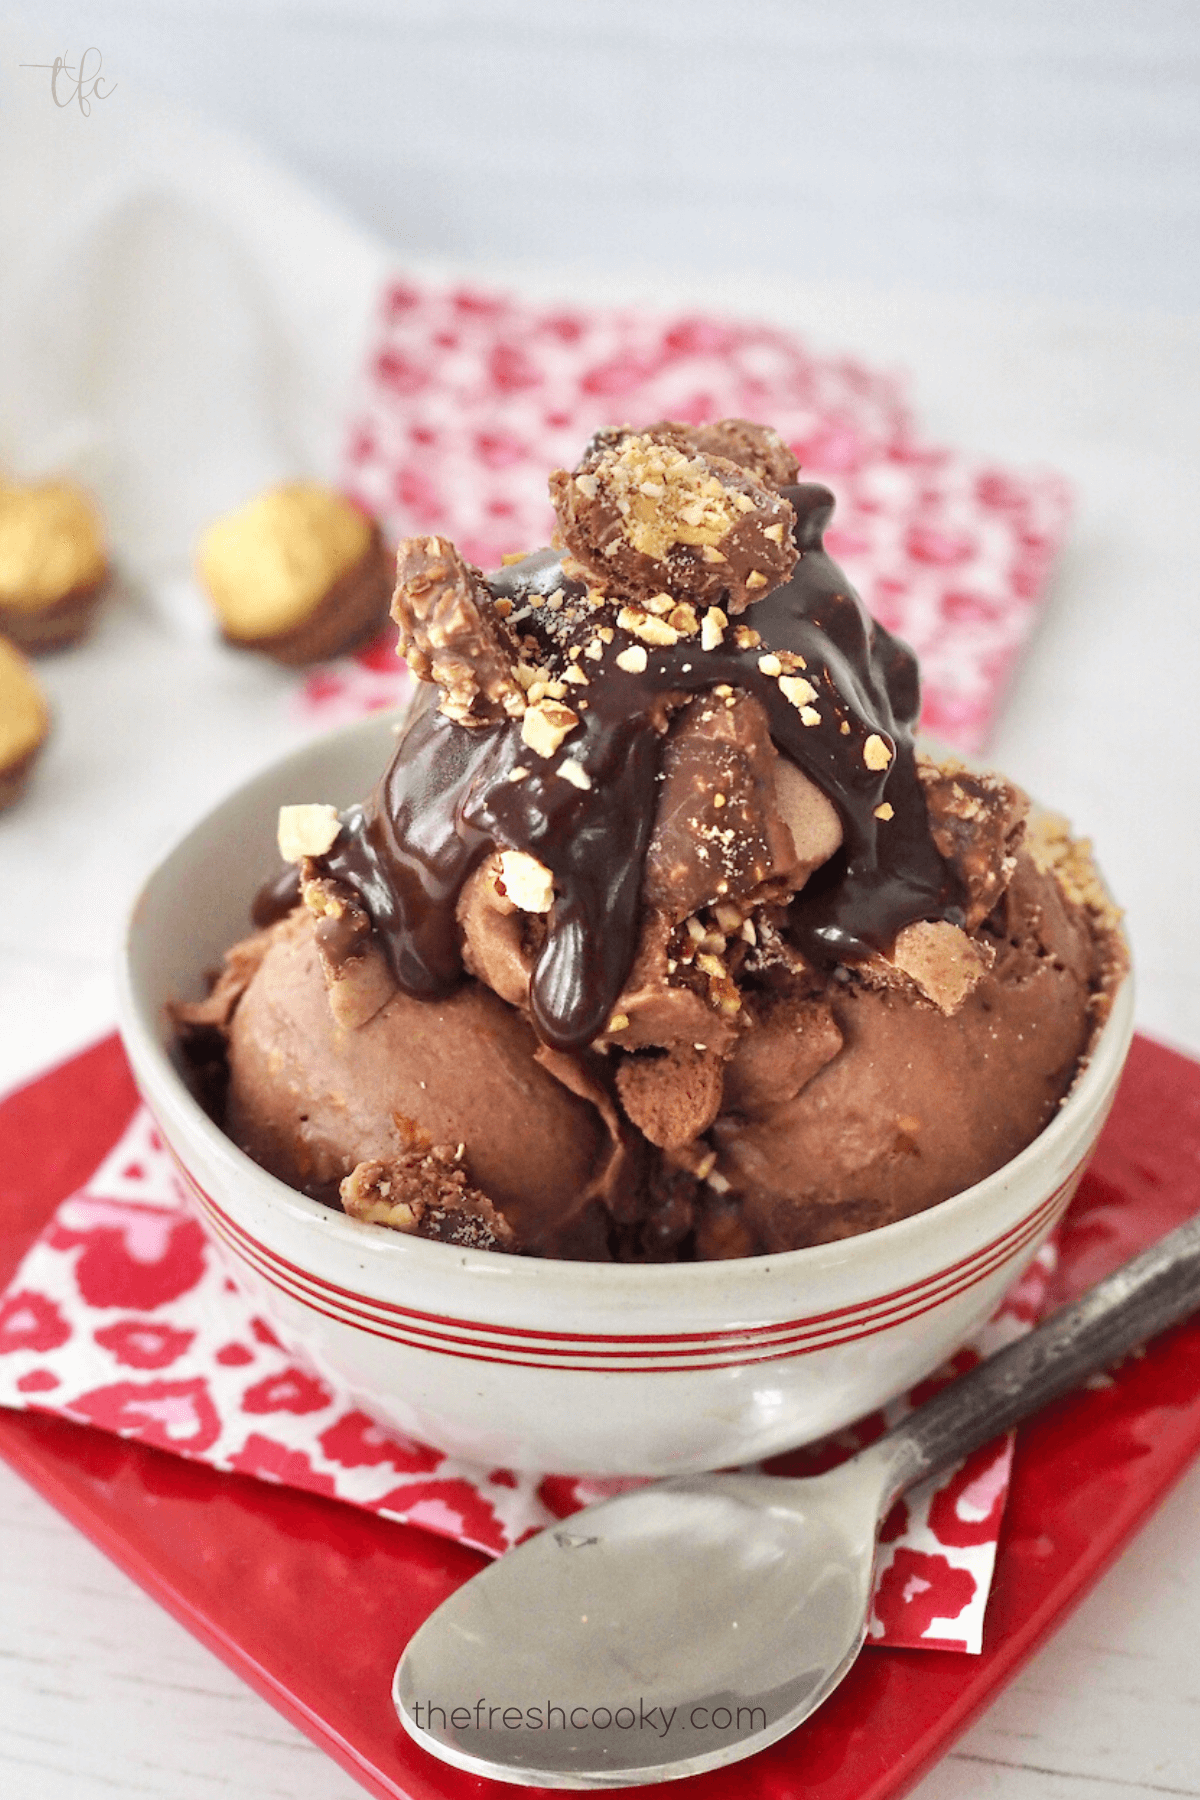 Ferrero Rocher Ice Cream in small dish with Valentine's Napkin, topped with hot fudge and crushed Ferrero Rocher chocolates.